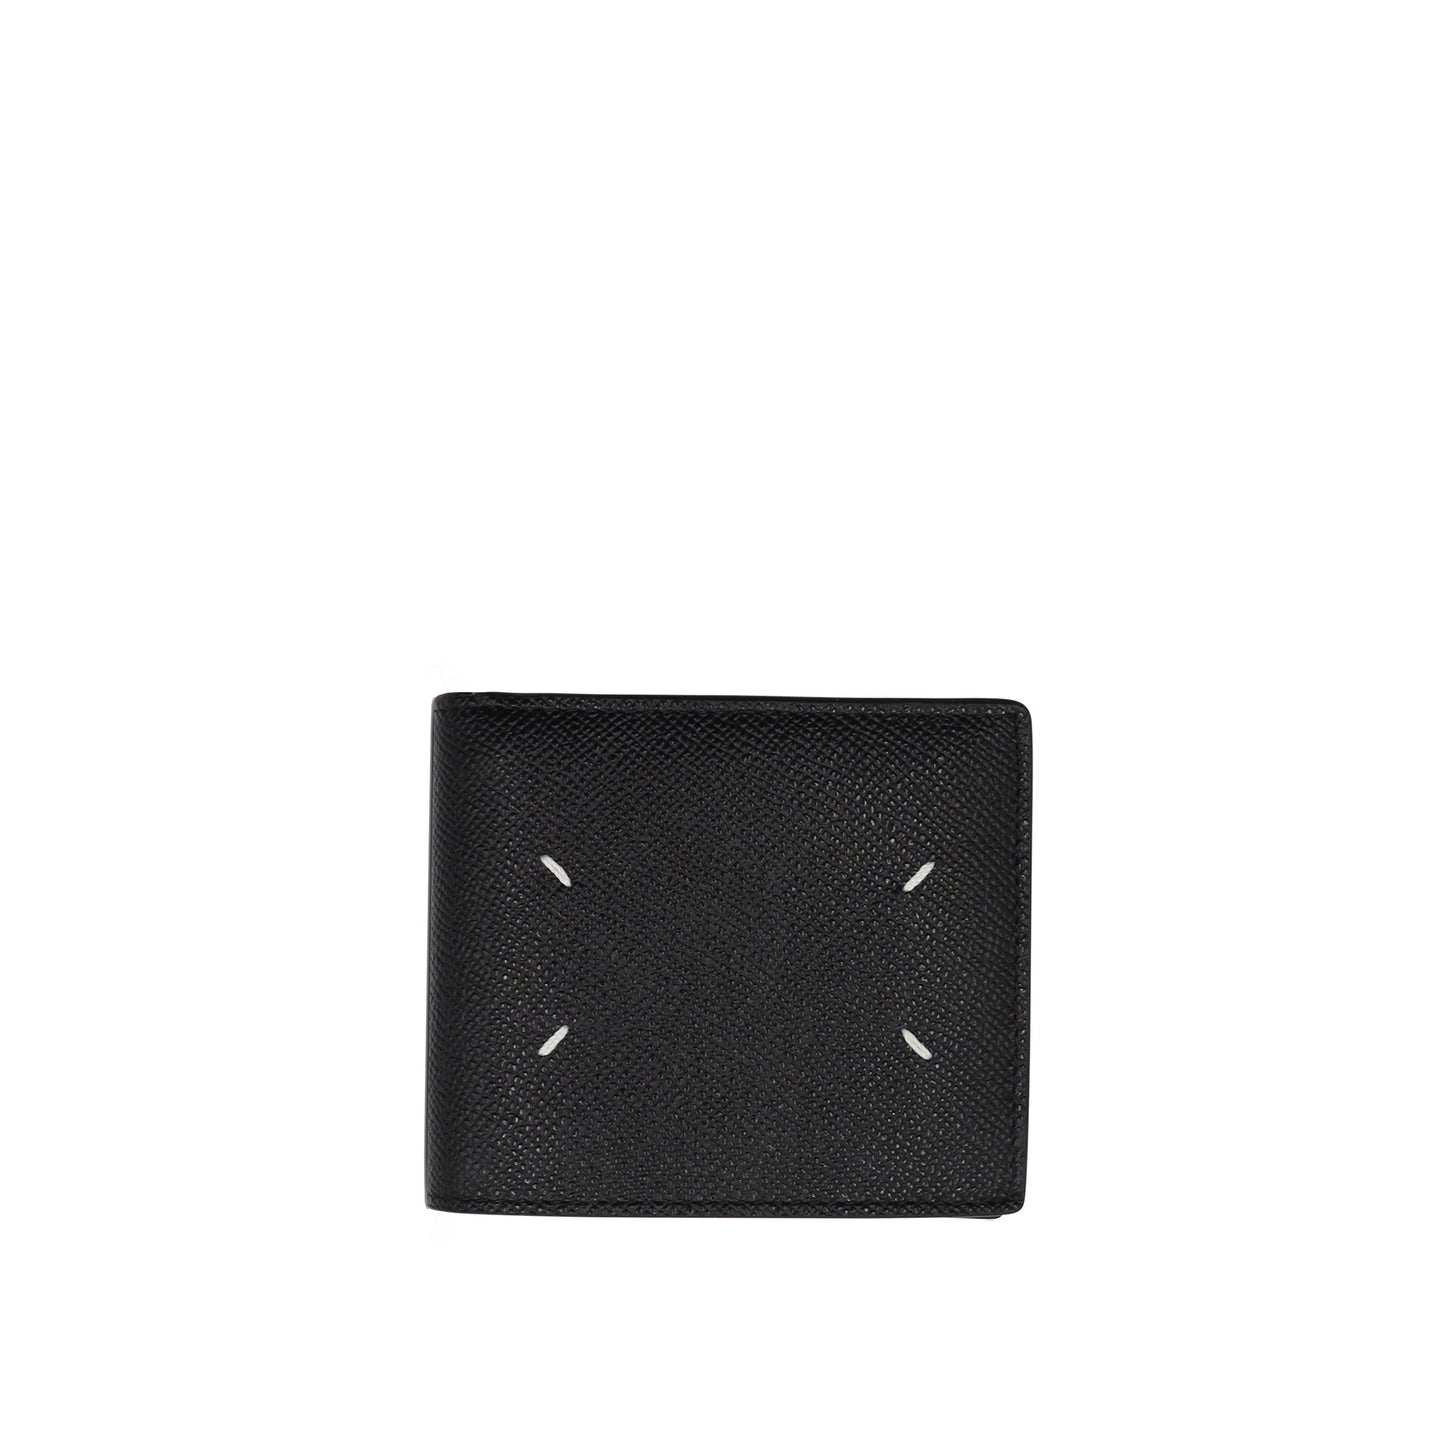 Four Stitch Bi-Fold Wallet in Black